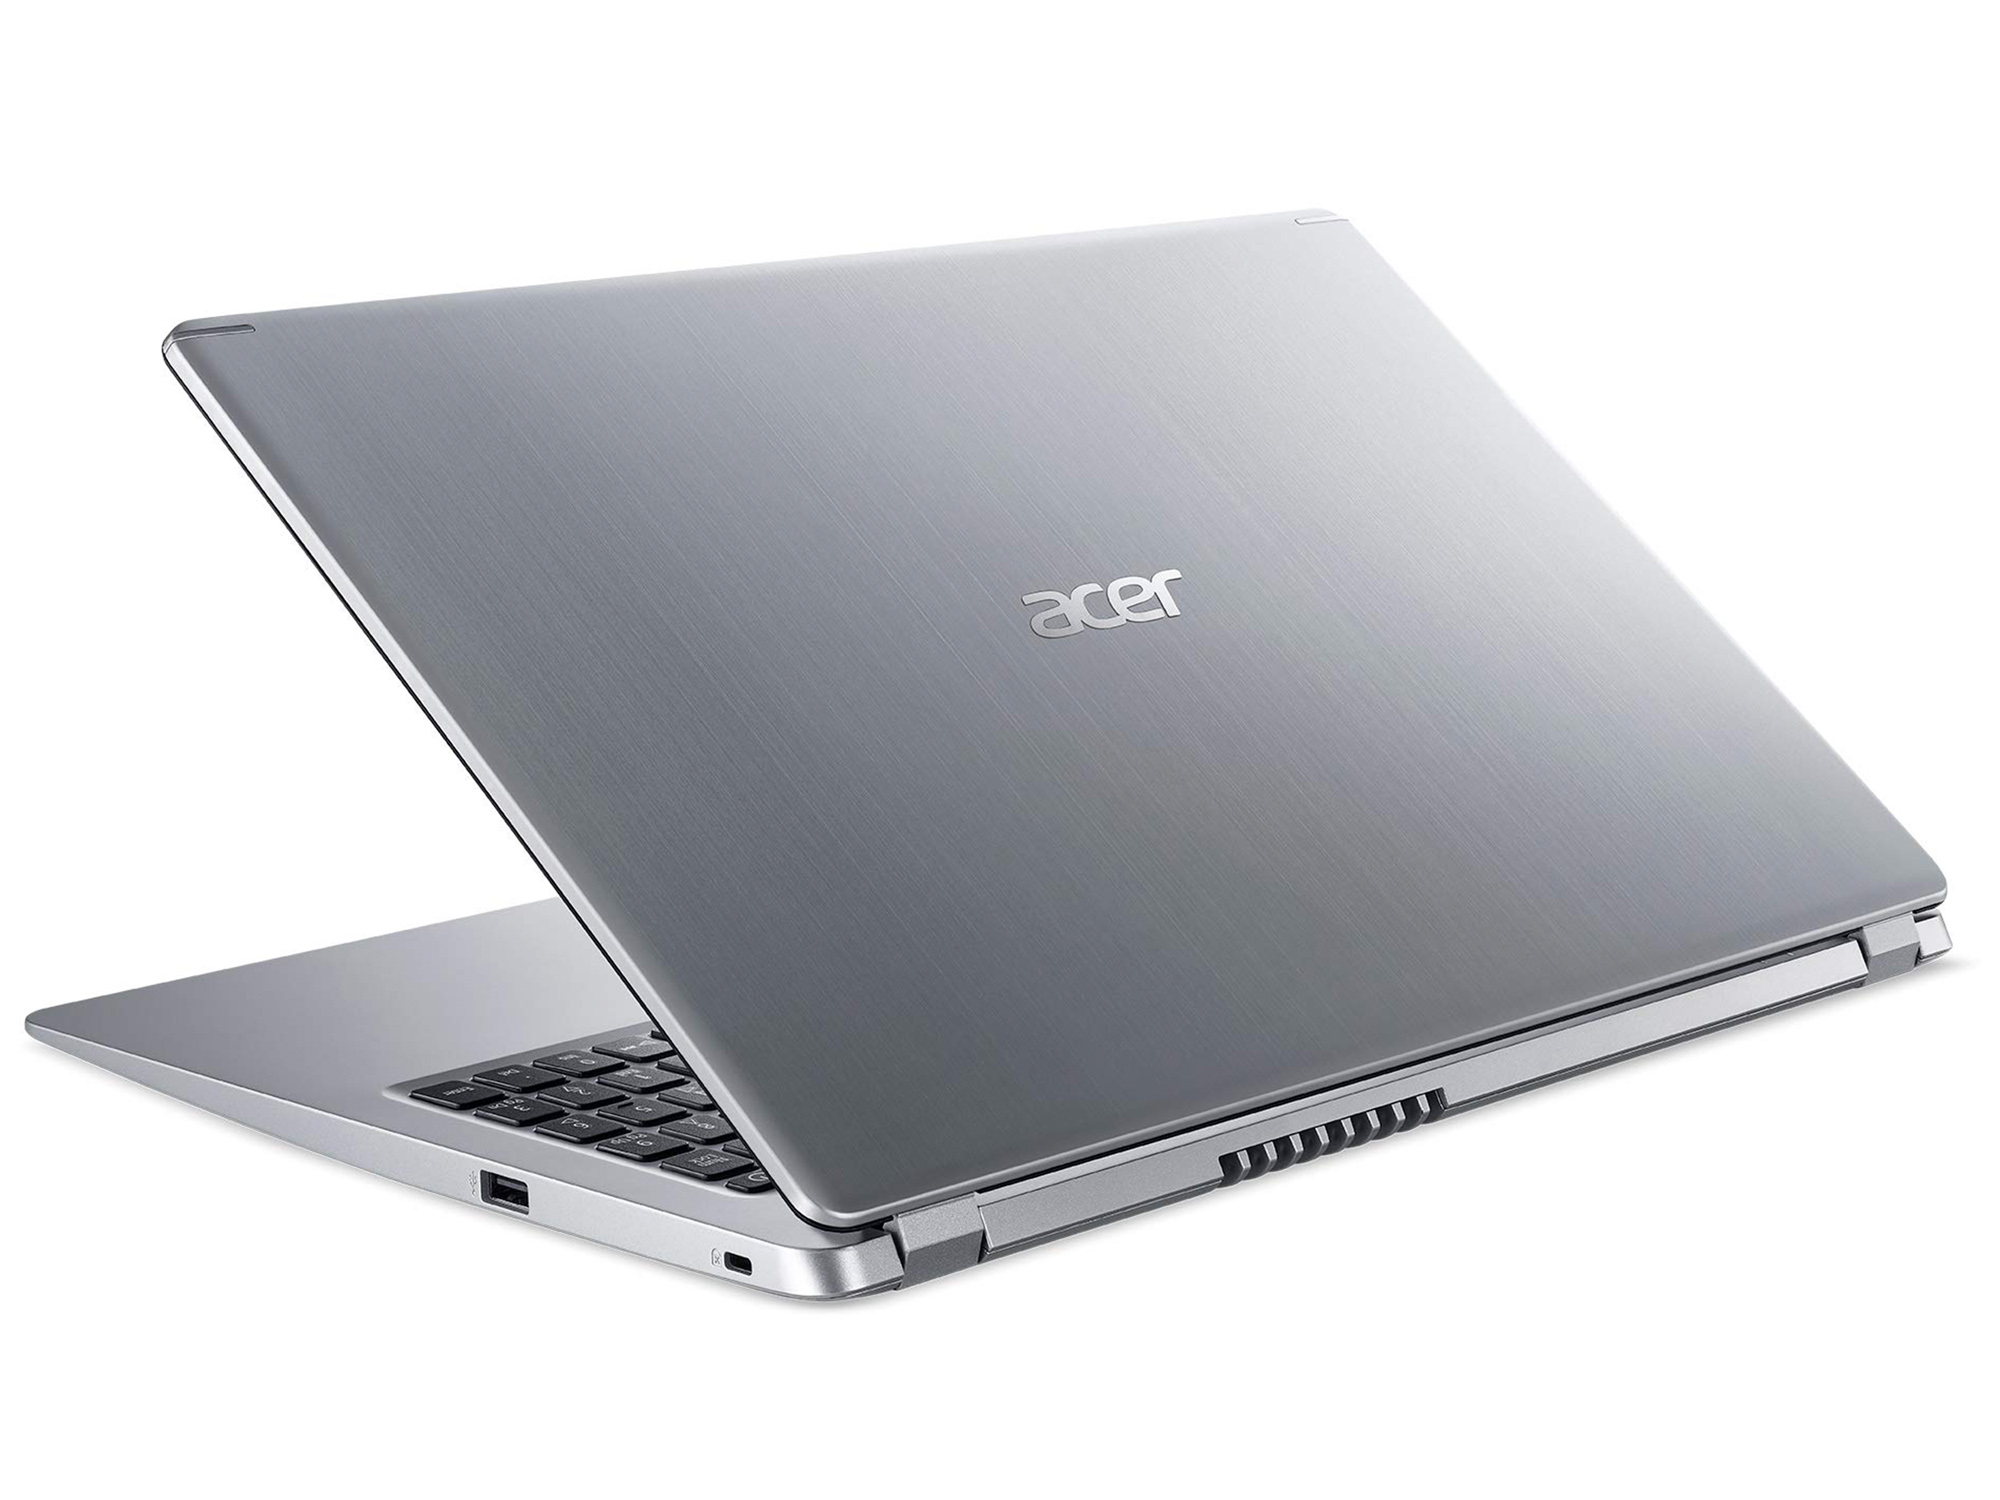 Acer Aspire 5 Slim Laptop, 15.6" Full HD IPS Display, AMD Ryzen 3 3200U, Vega 3 Graphics, 4GB DDR4, 128GB SSD, Backlit Keyboard, Windows 10 in S Mode, A515-43-R19L - image 3 of 7